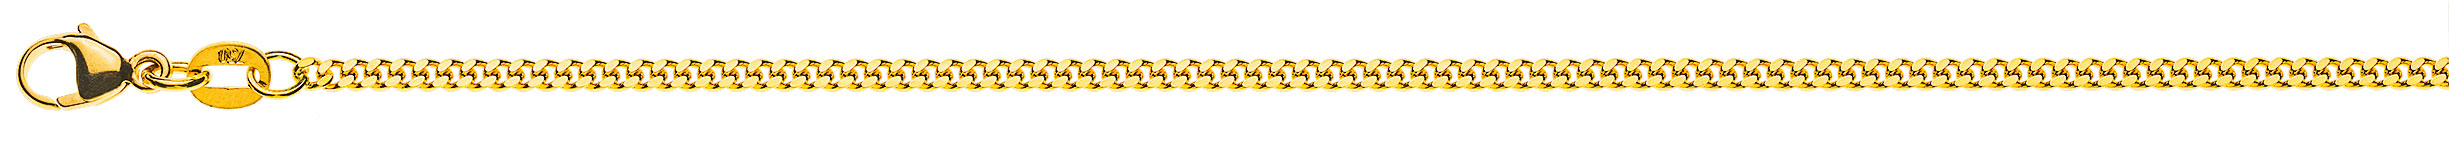 AURONOS Prestige Necklace yellow gold 18K curb chain polished 45cm 2.0mm